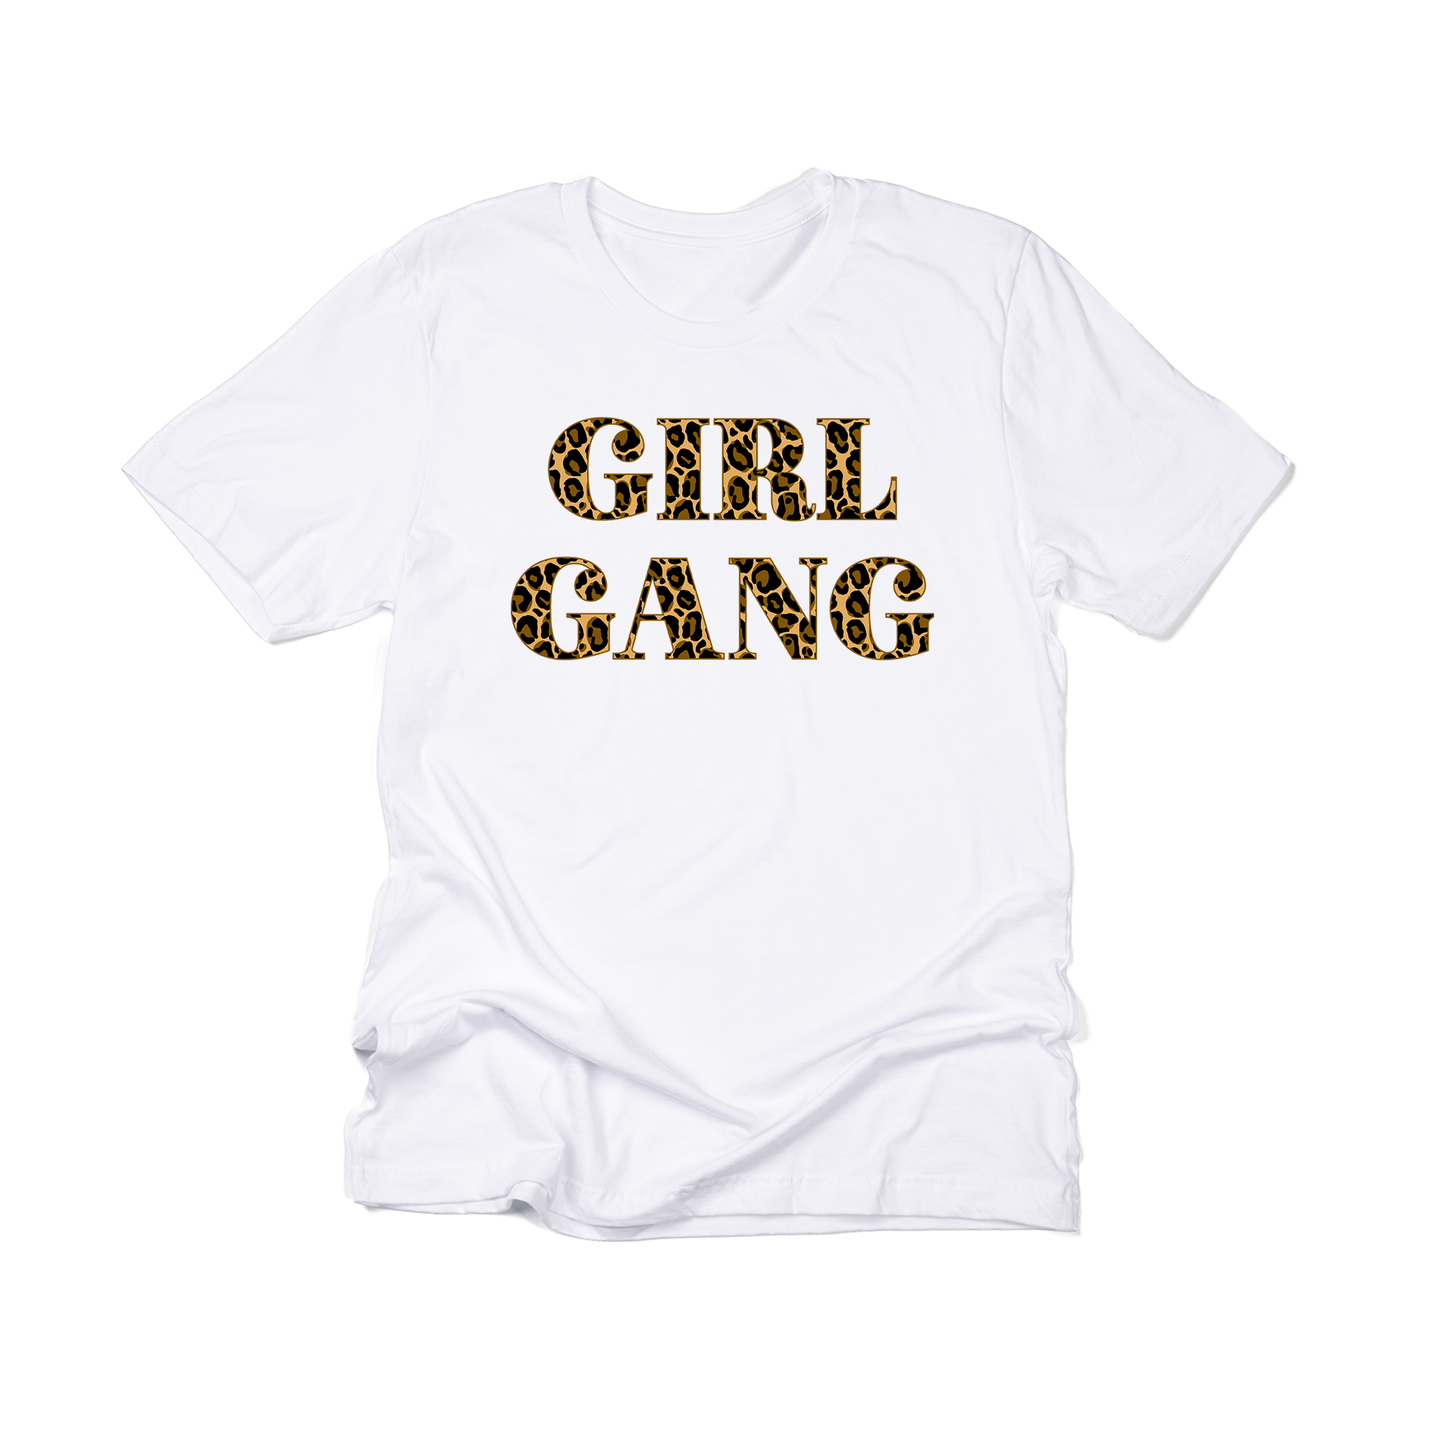 Girl Gang (Leopard Print) - Tee (White)